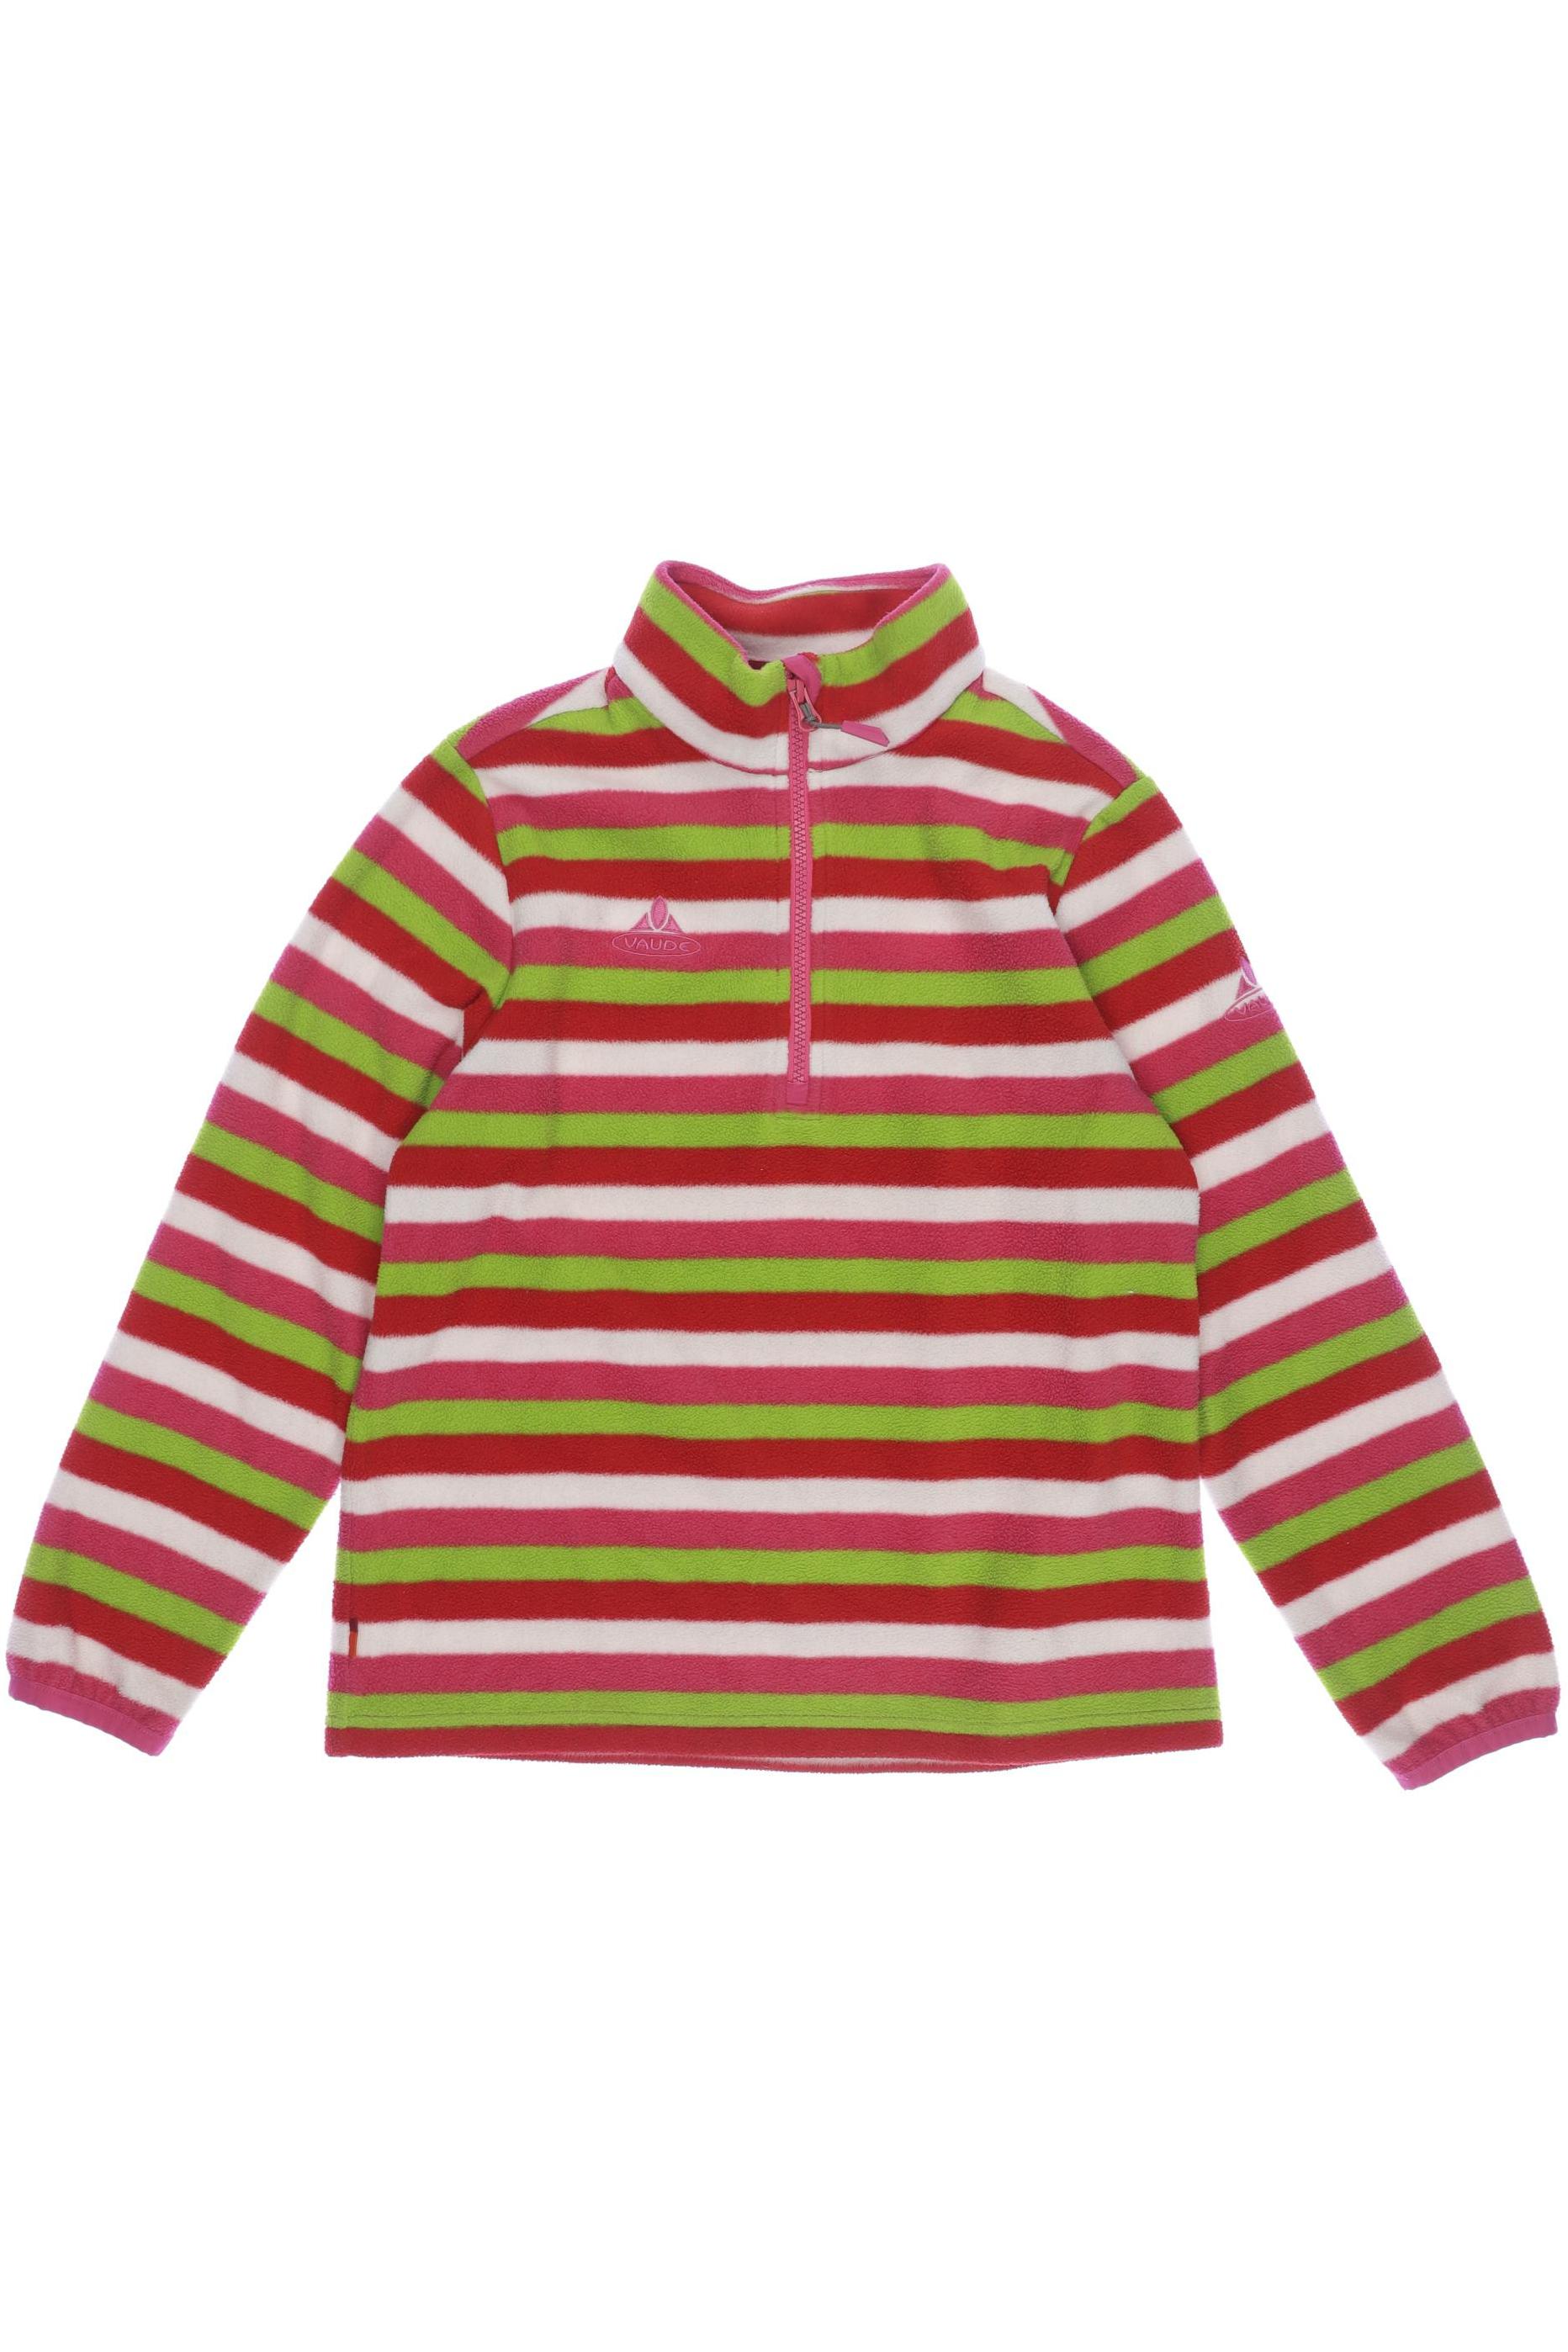 Vaude Damen Hoodies & Sweater, mehrfarbig, Gr. 134 von Vaude